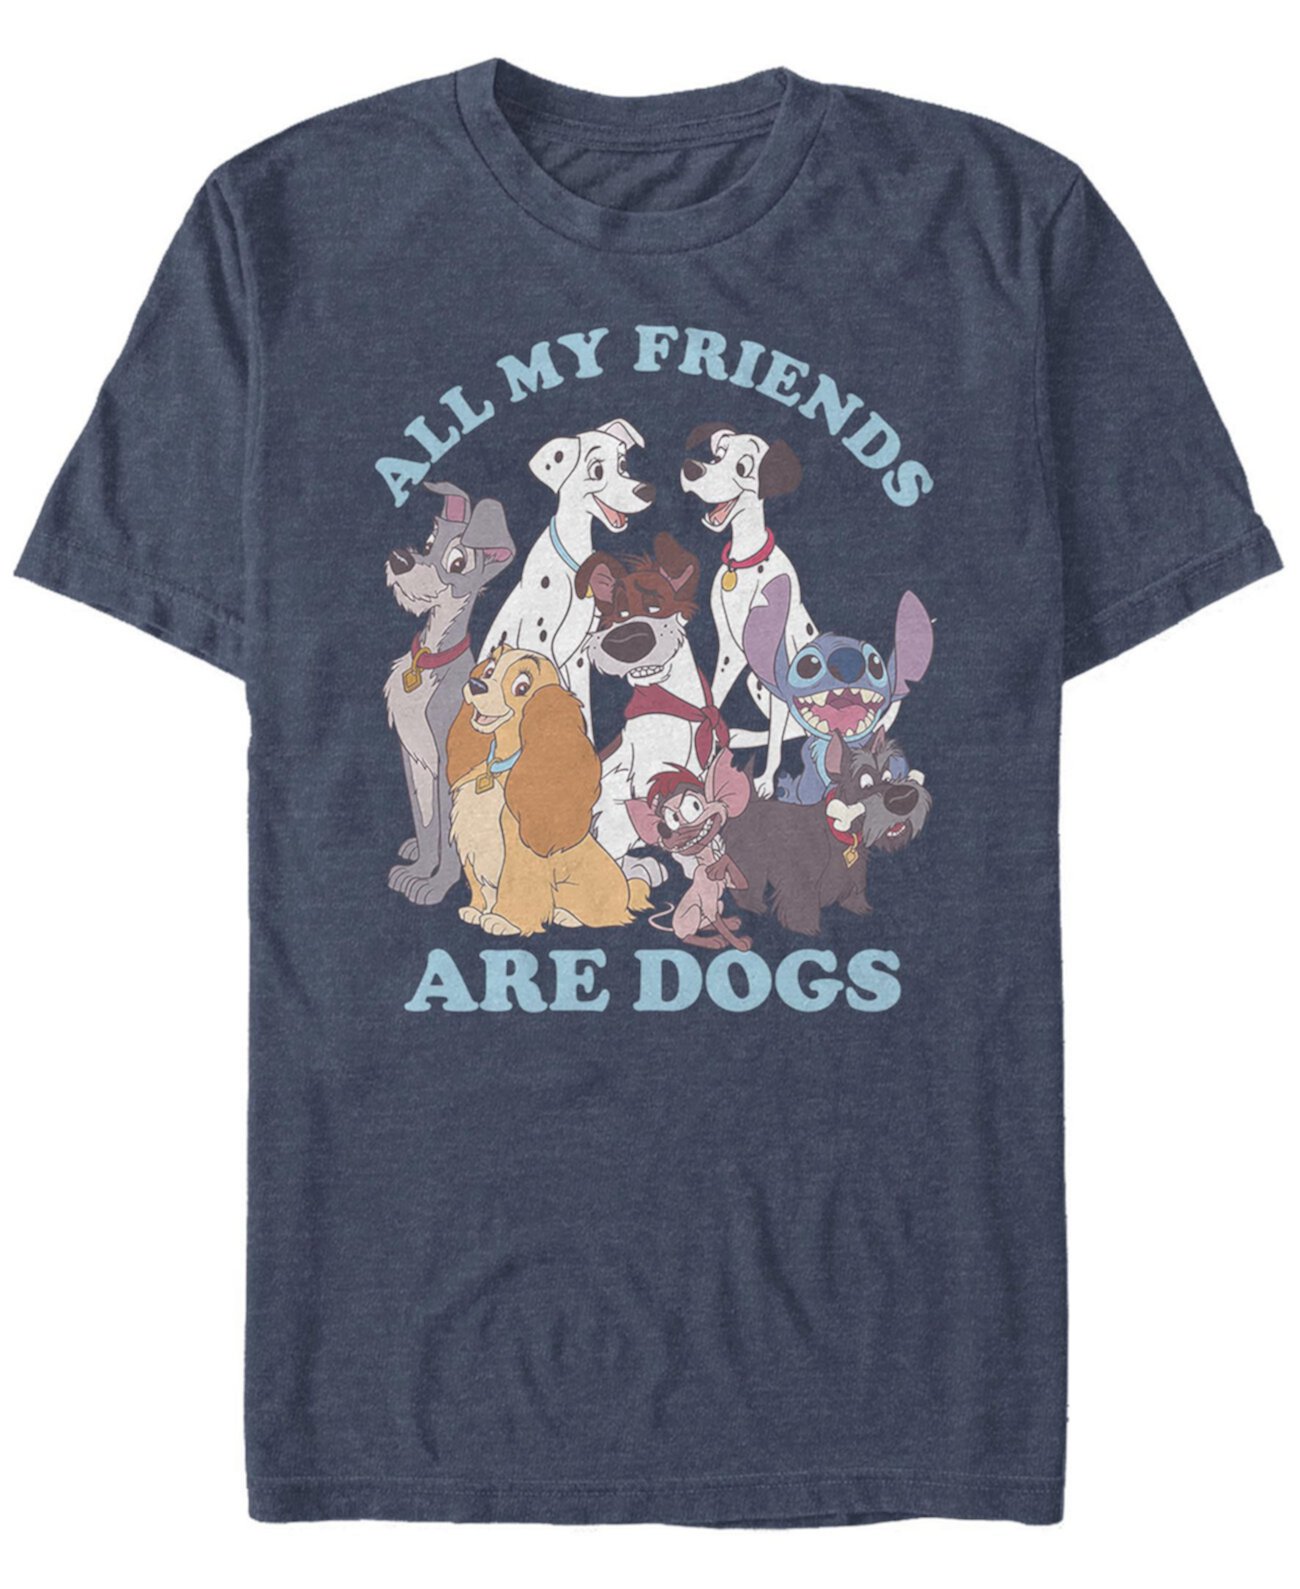 Мужская футболка с коротким рукавом Disney Multi Franchise Dog Friends FIFTH SUN